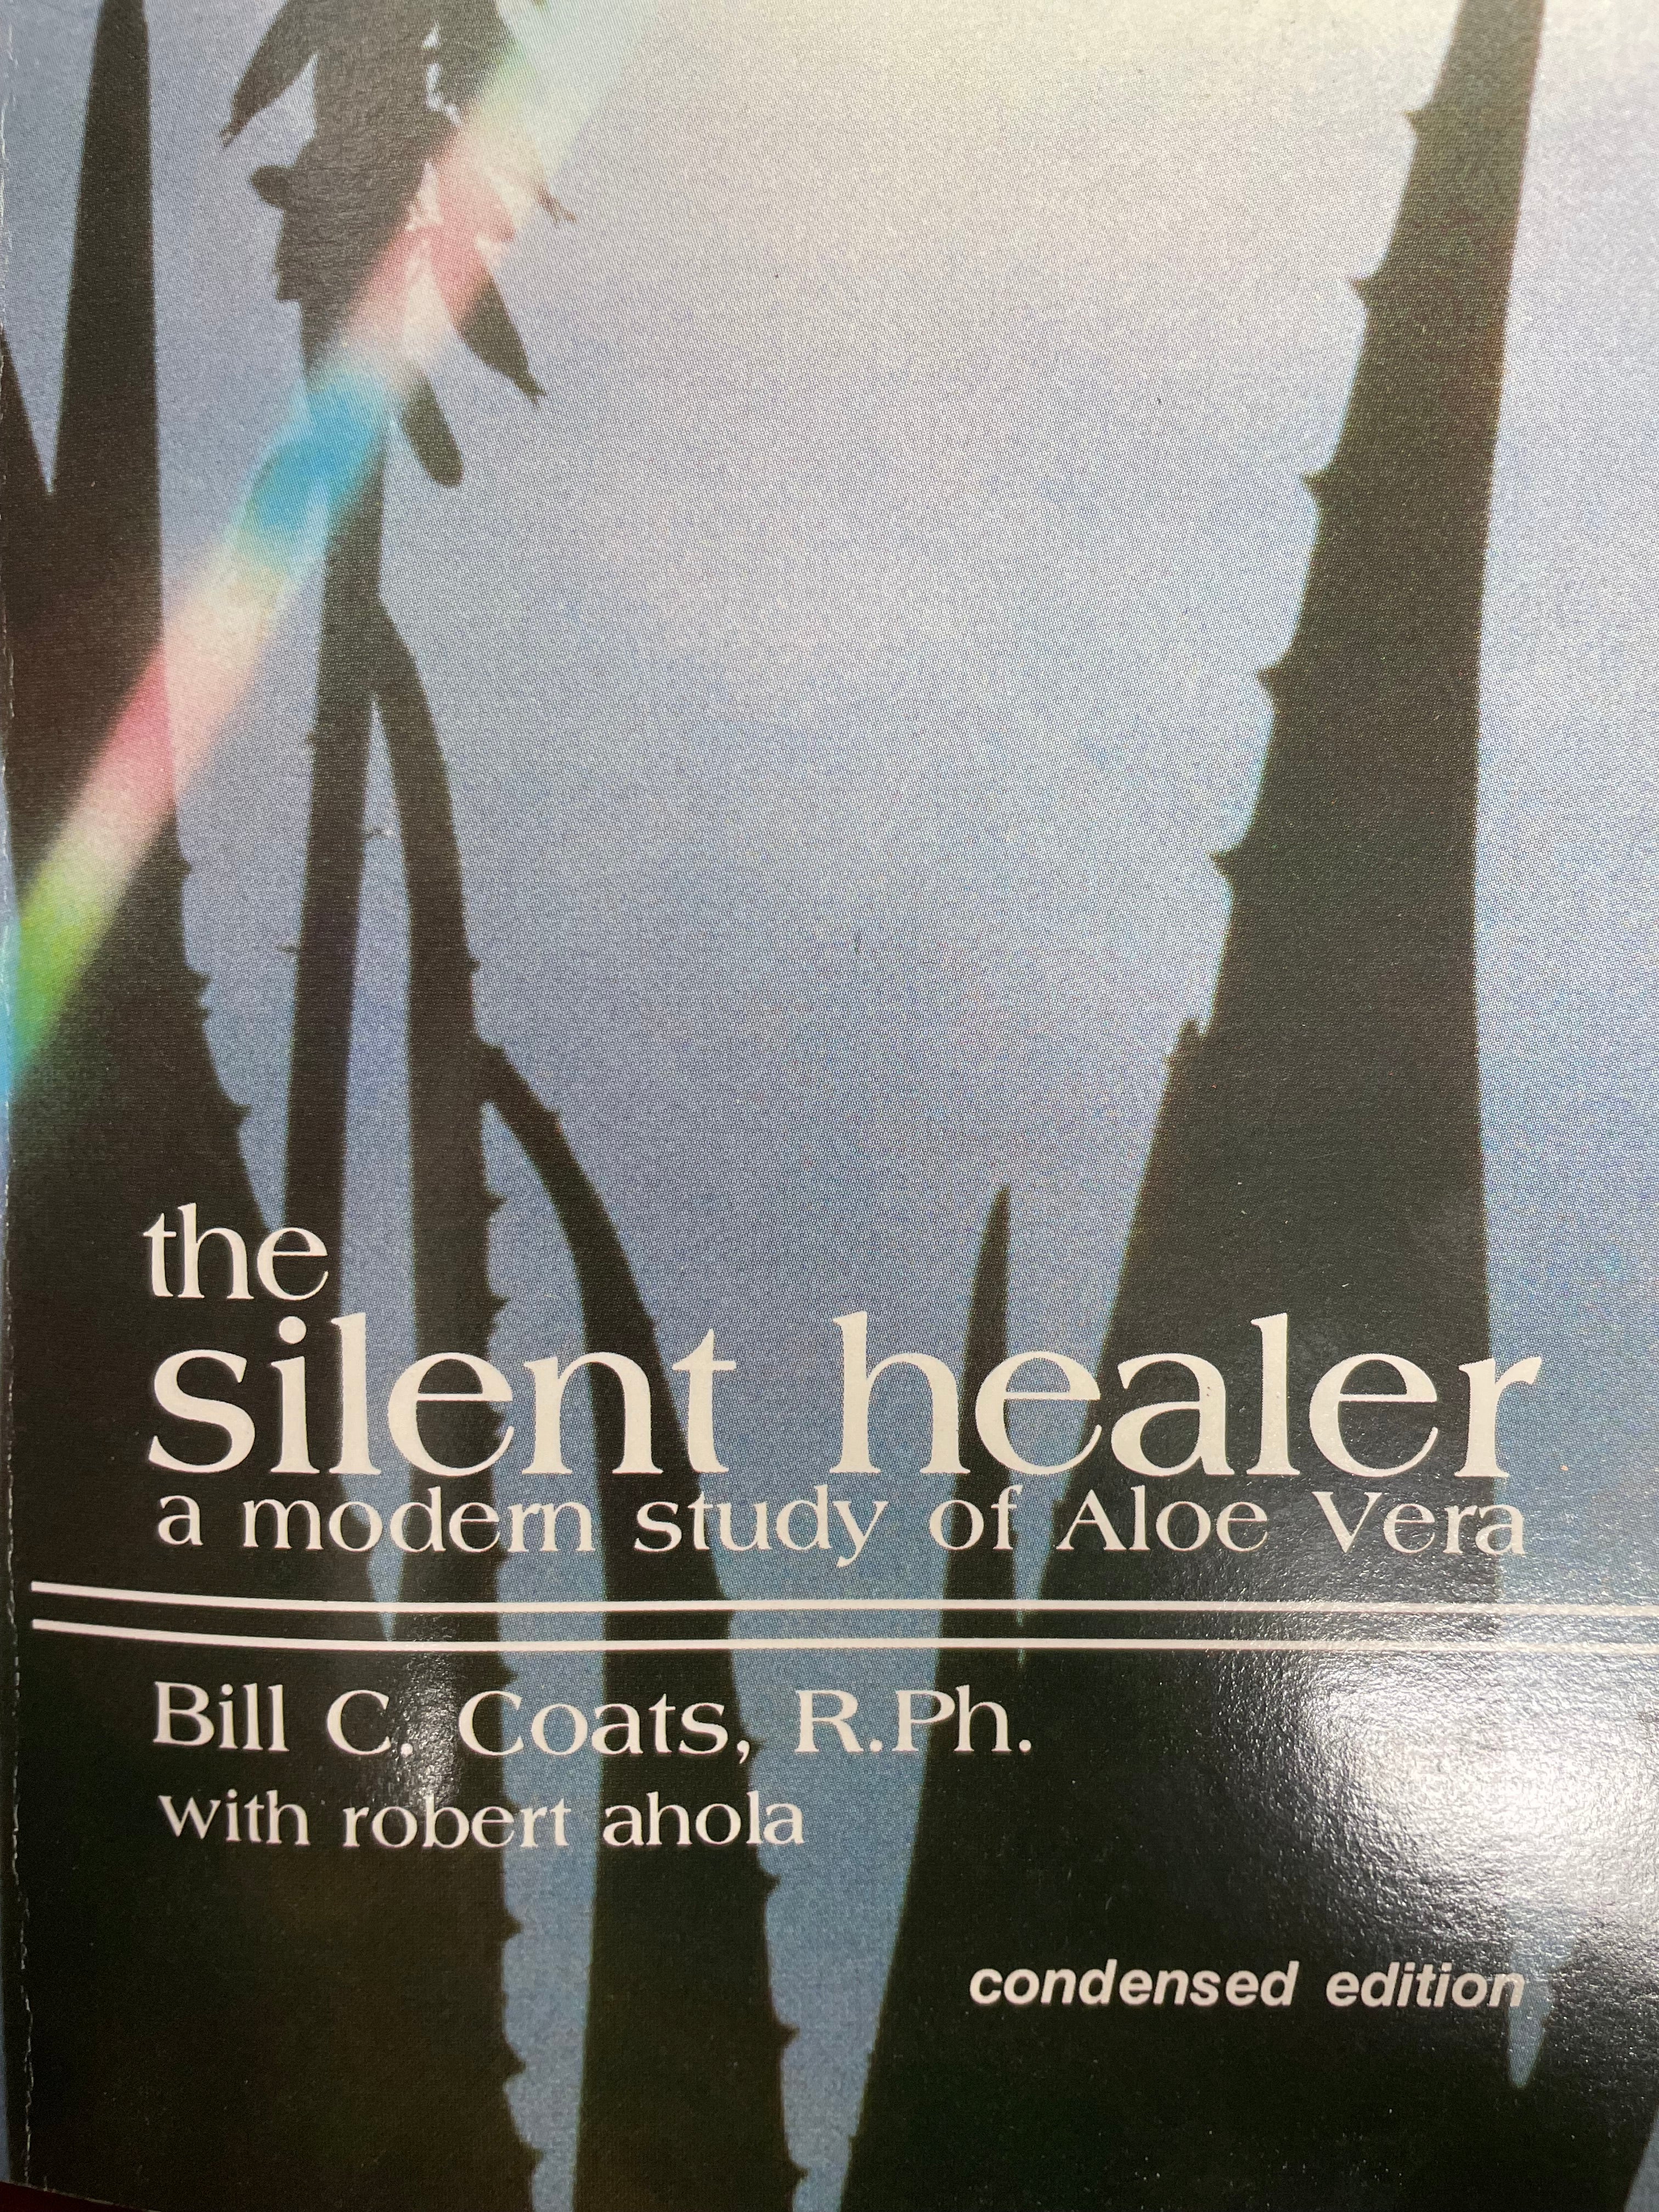 The Aloe Book - PDF The Silent Healer Condensed Version